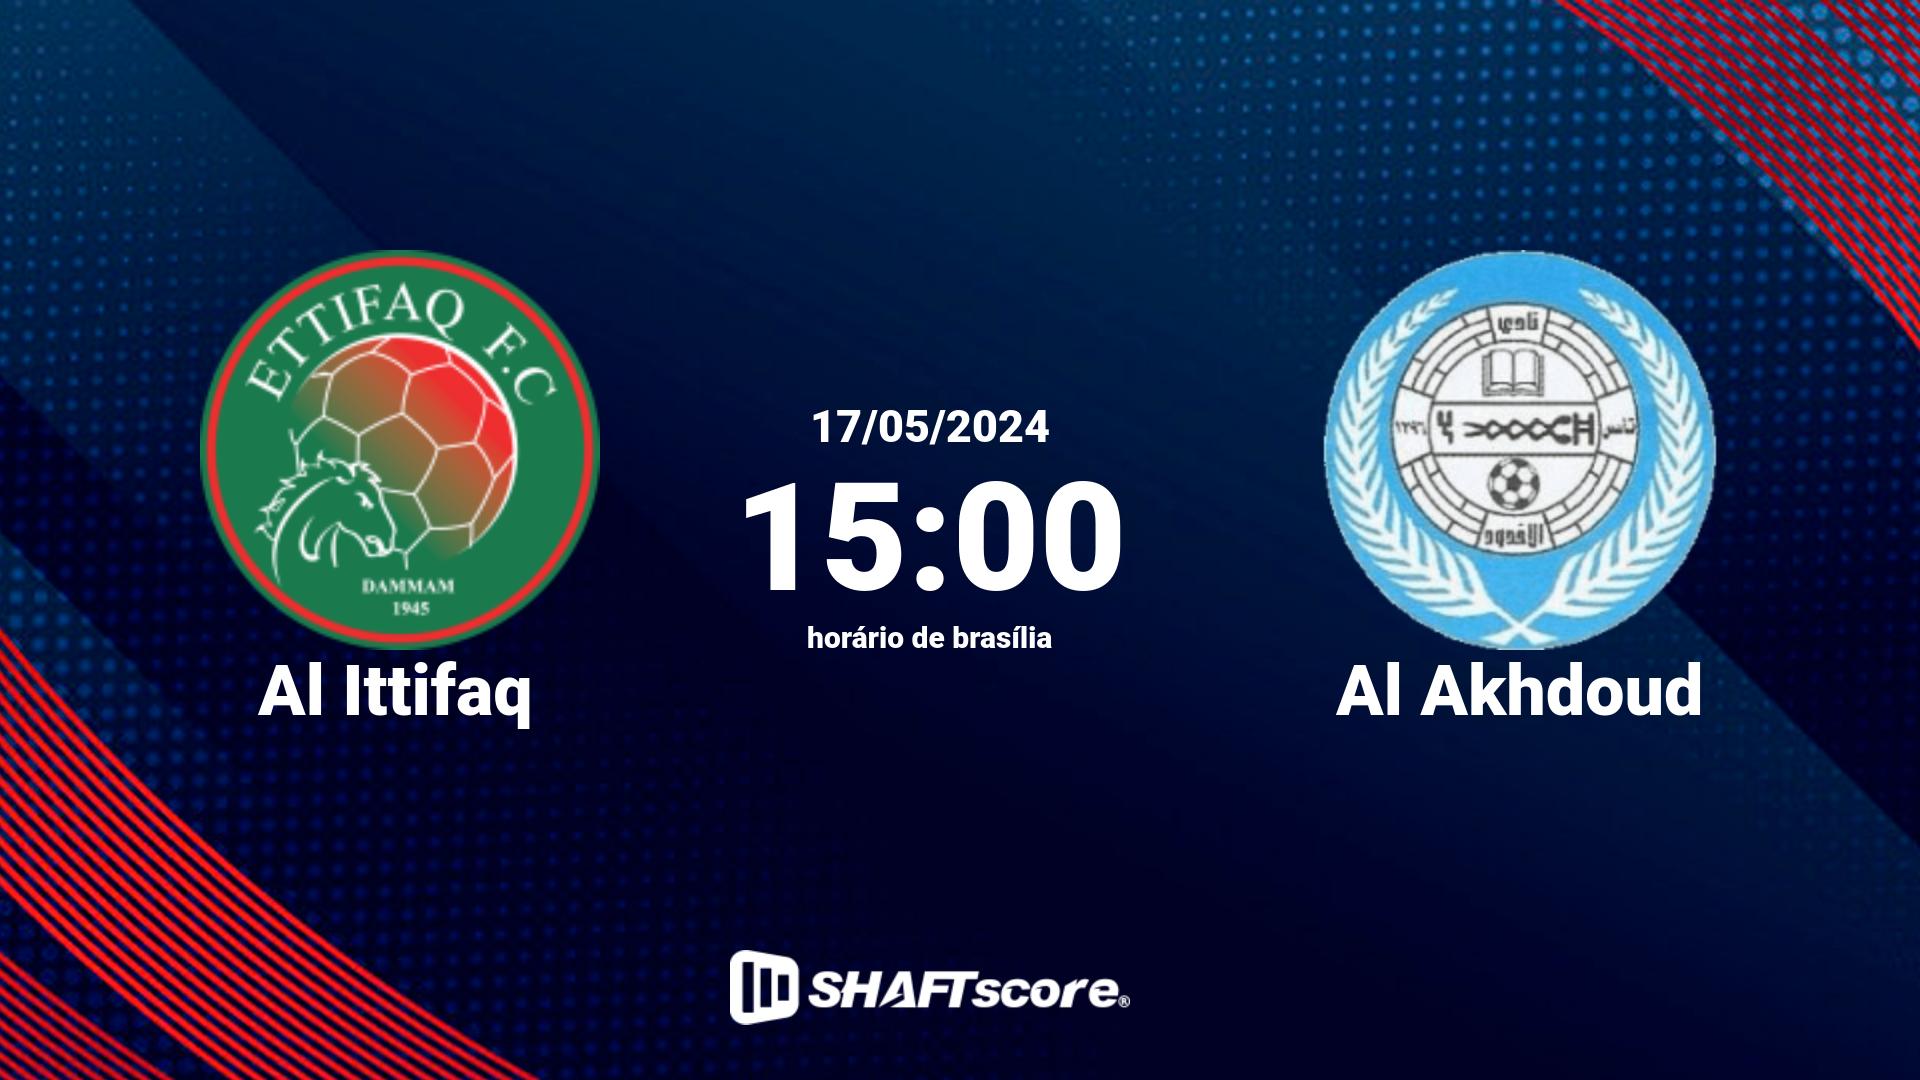 Estatísticas do jogo Al Ittifaq vs Al Akhdoud 17.05 15:00